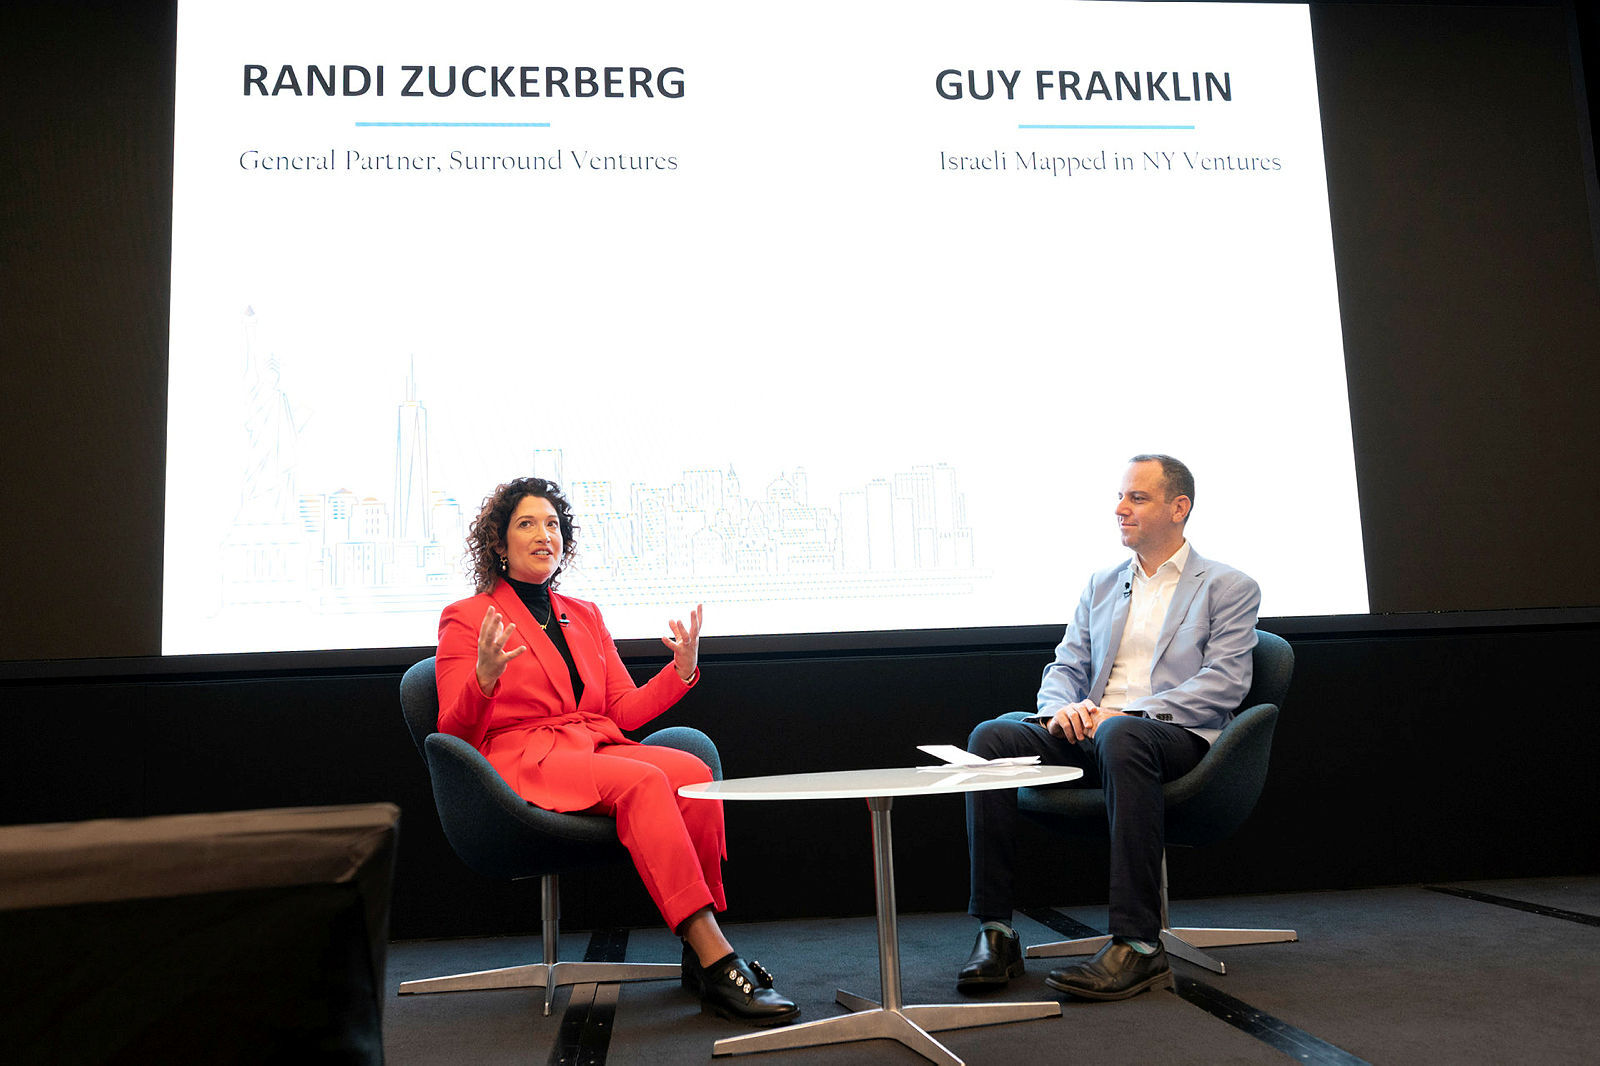 Randi Zuckerberg (left) being interviewed by Guy Franklin of Israeli Mapped in NY. Photo: Nir Arieli